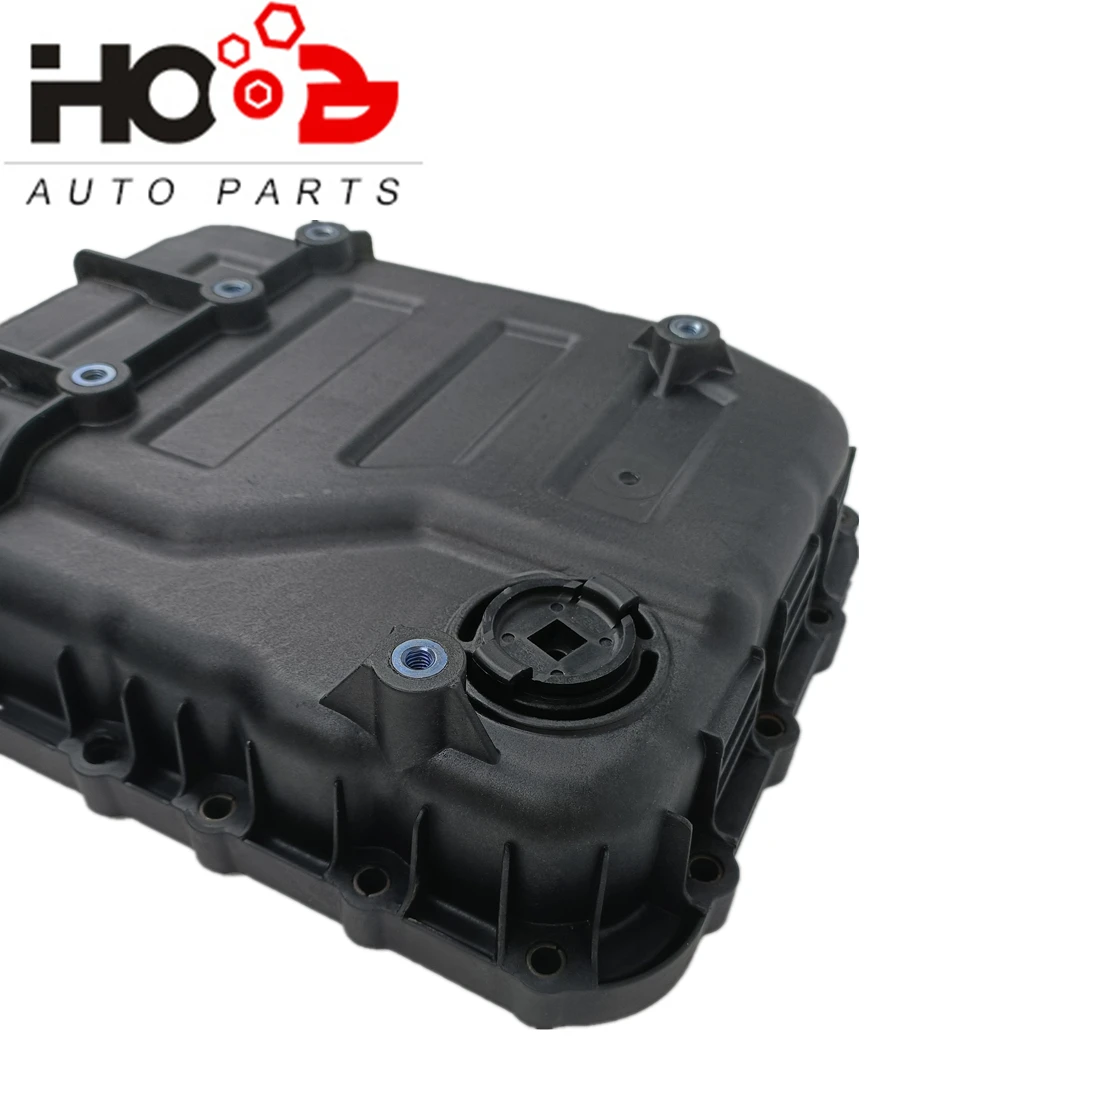 HOOB Cheap Price Transmission oil pan 45280-3B851 for car ix35 2014-2016